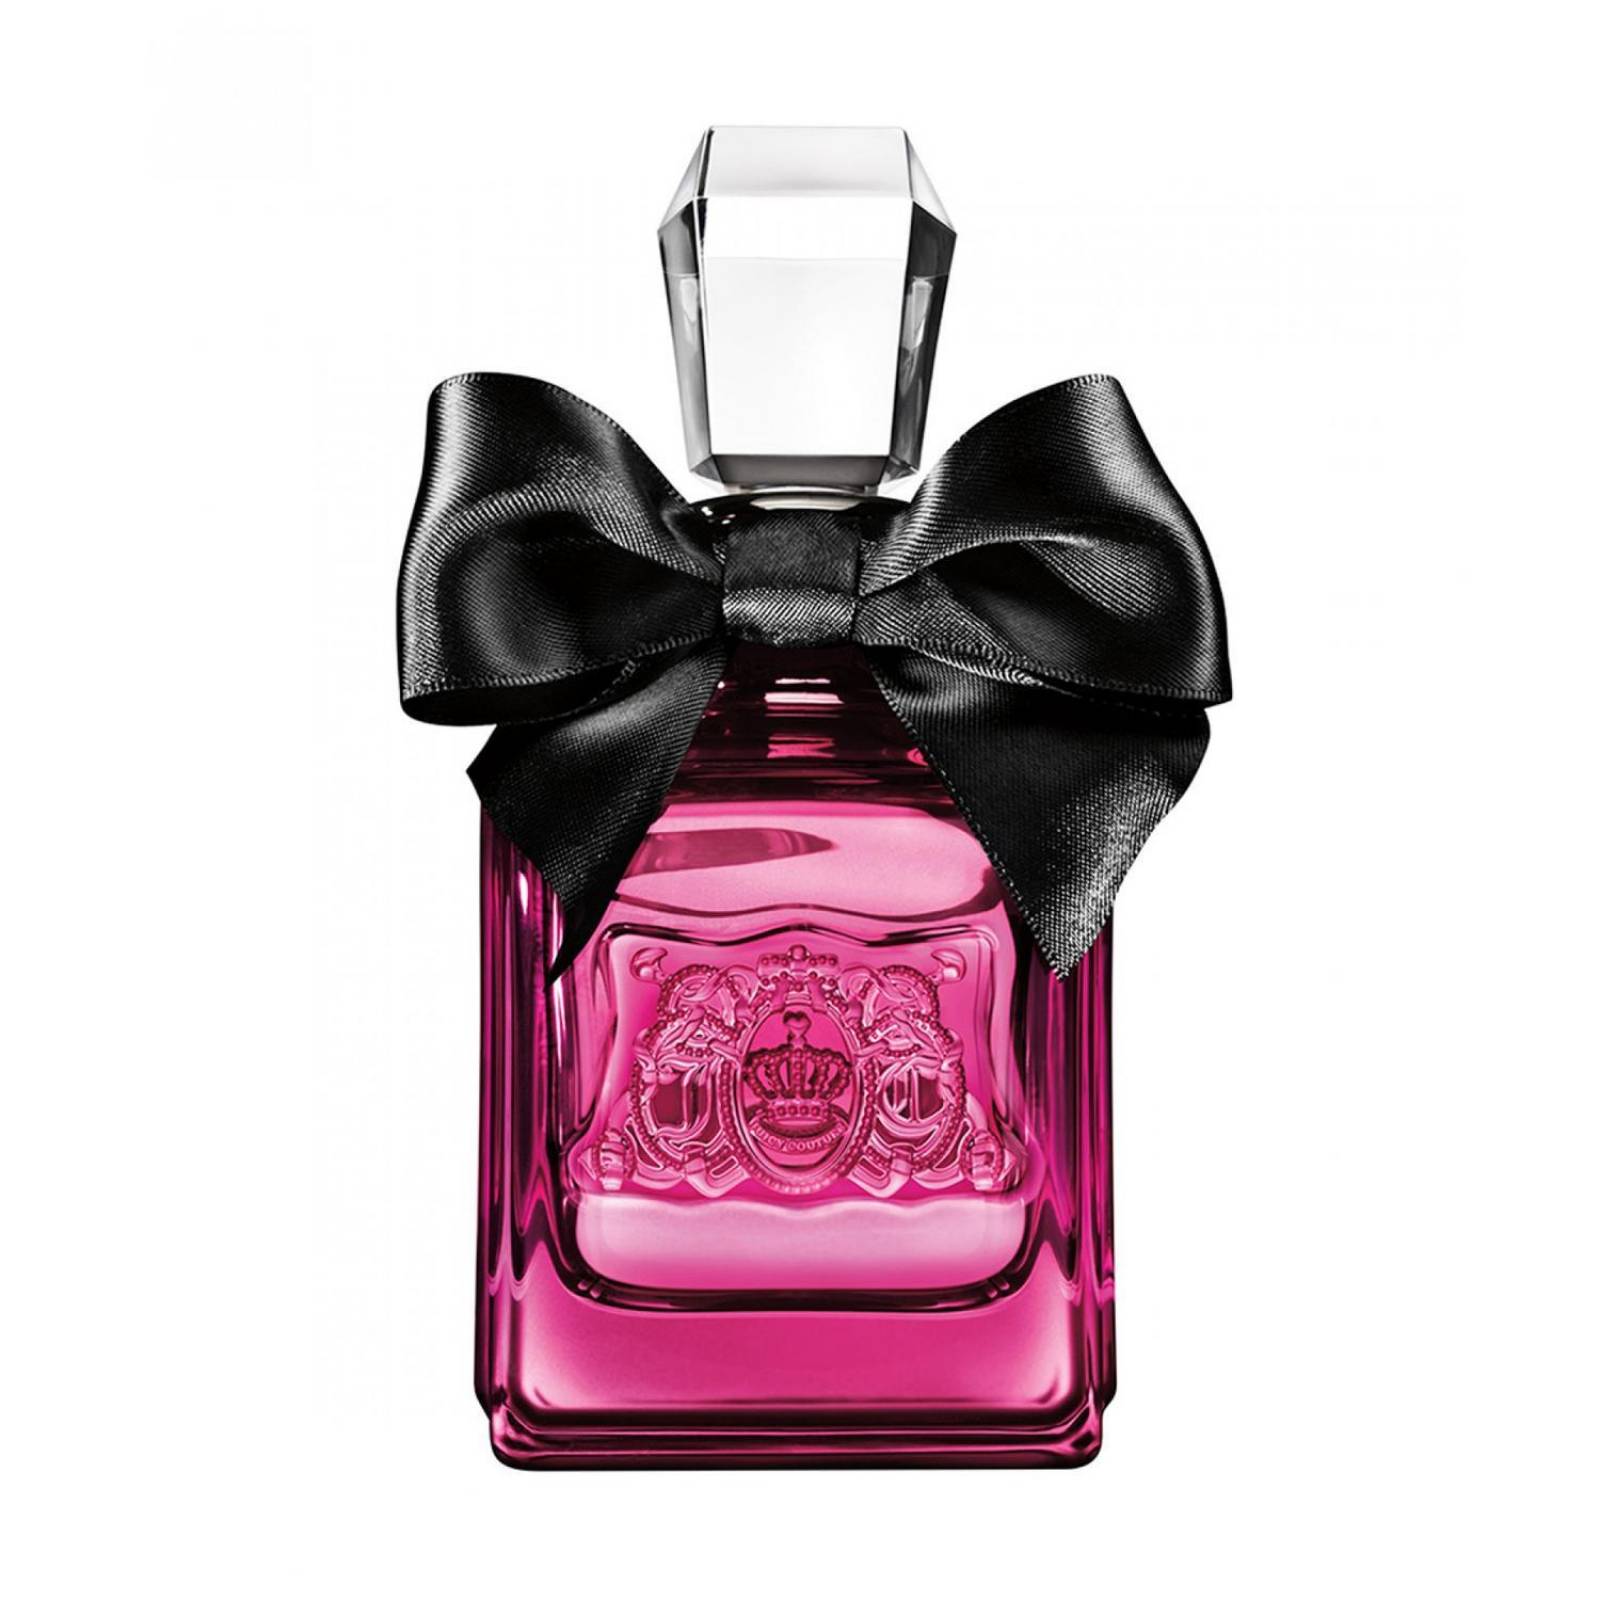 Perfume viva la juicy noir de juicy couture edp 100 ml - Sears